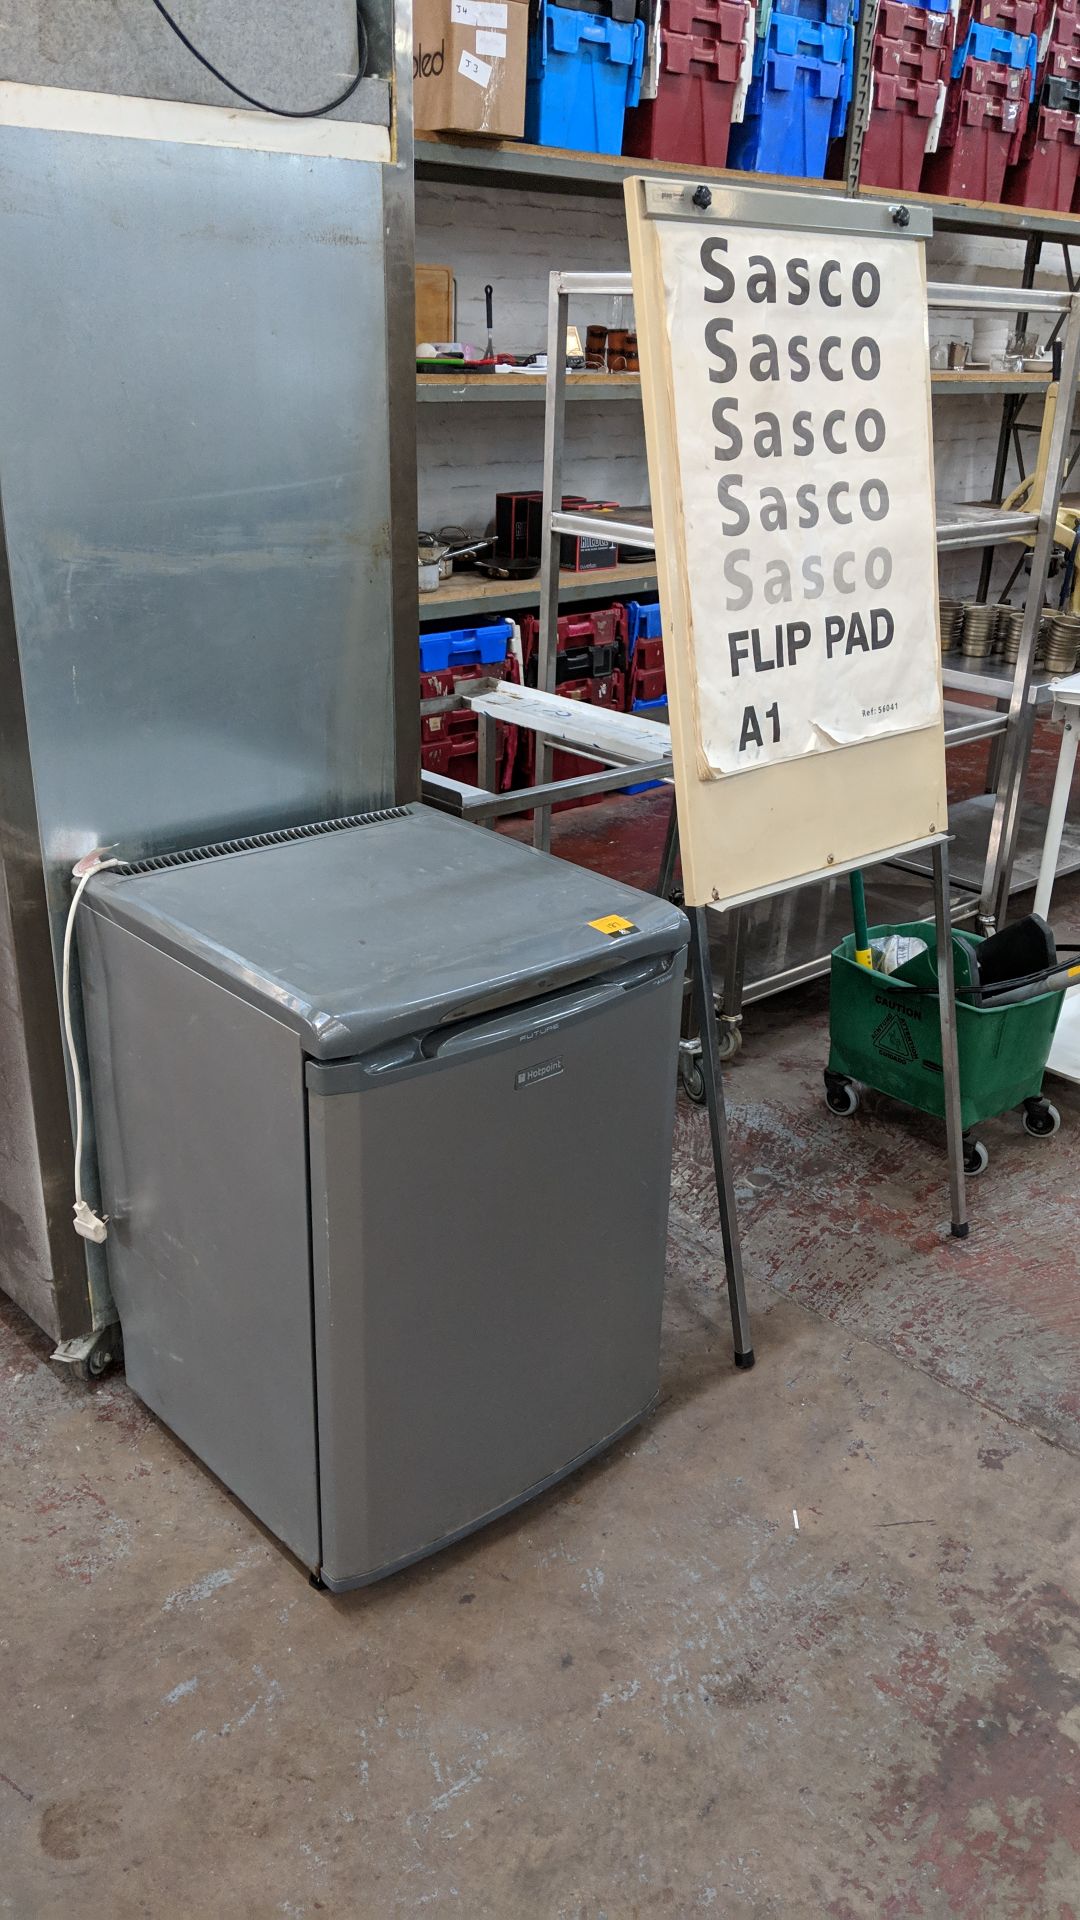 Hotpoint Future counter height fridge plus Sasco flipchart holder including padLots 187 – 189 and - Image 2 of 3